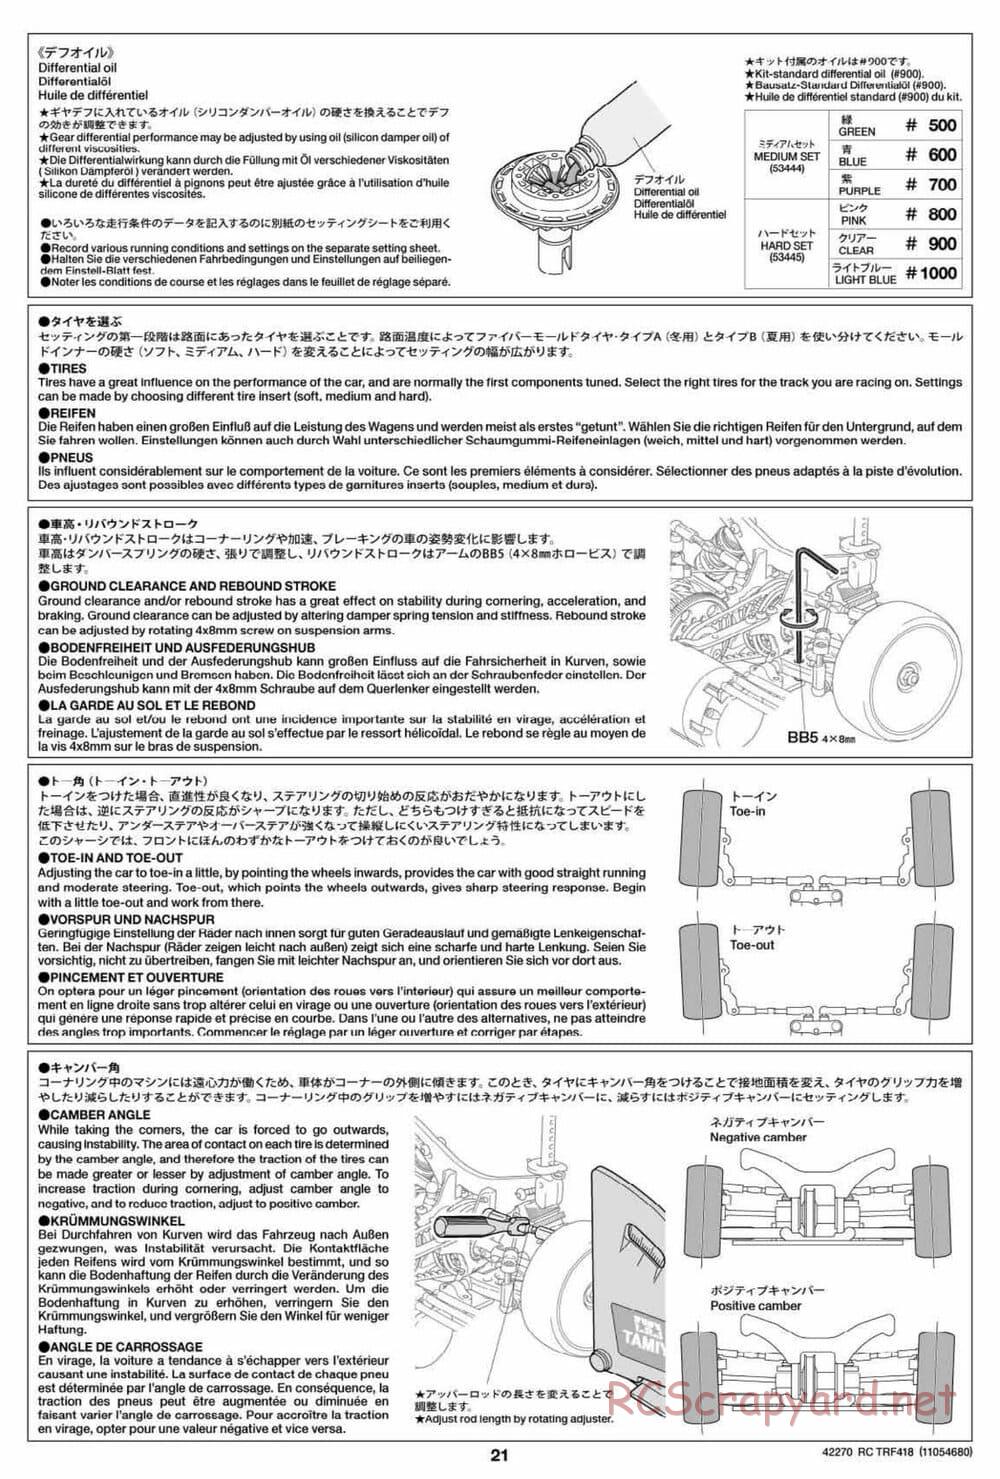 Tamiya - TRF418 Chassis - Manual - Page 21